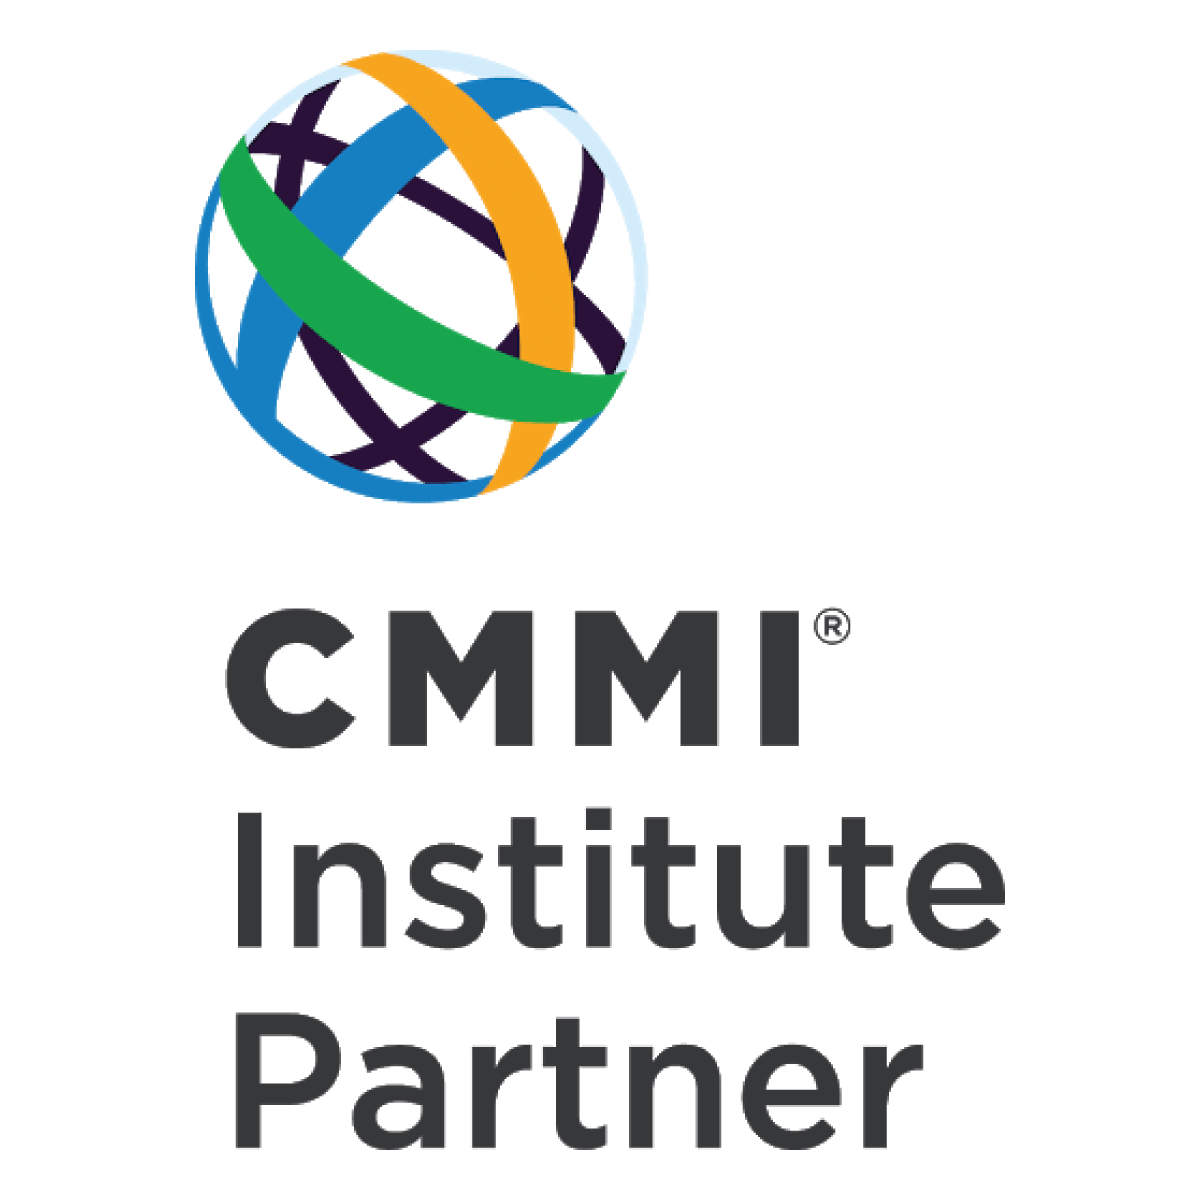 ITG is partner of CMMI Institite